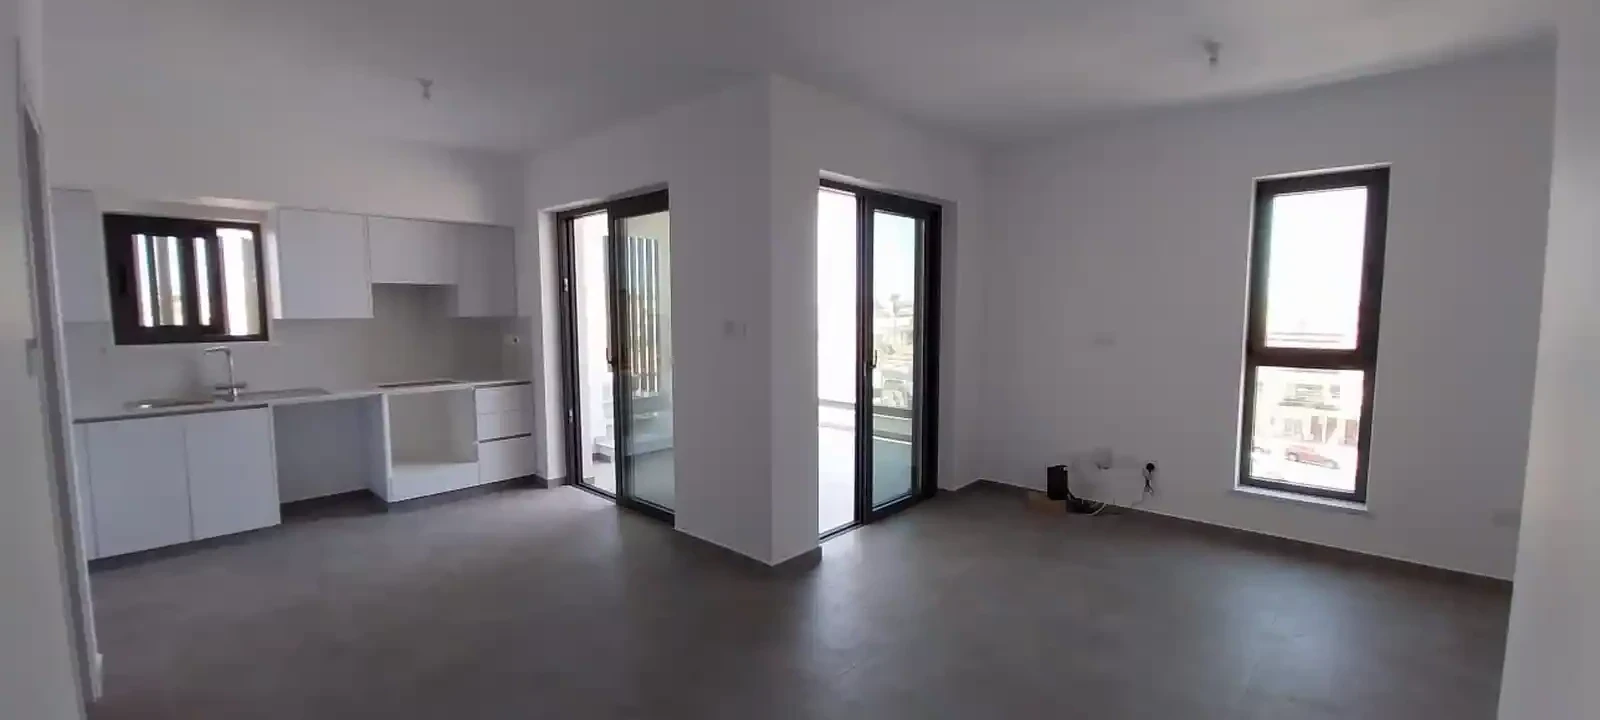 2-bedroom penthouse fоr sаle €295.000, image 1